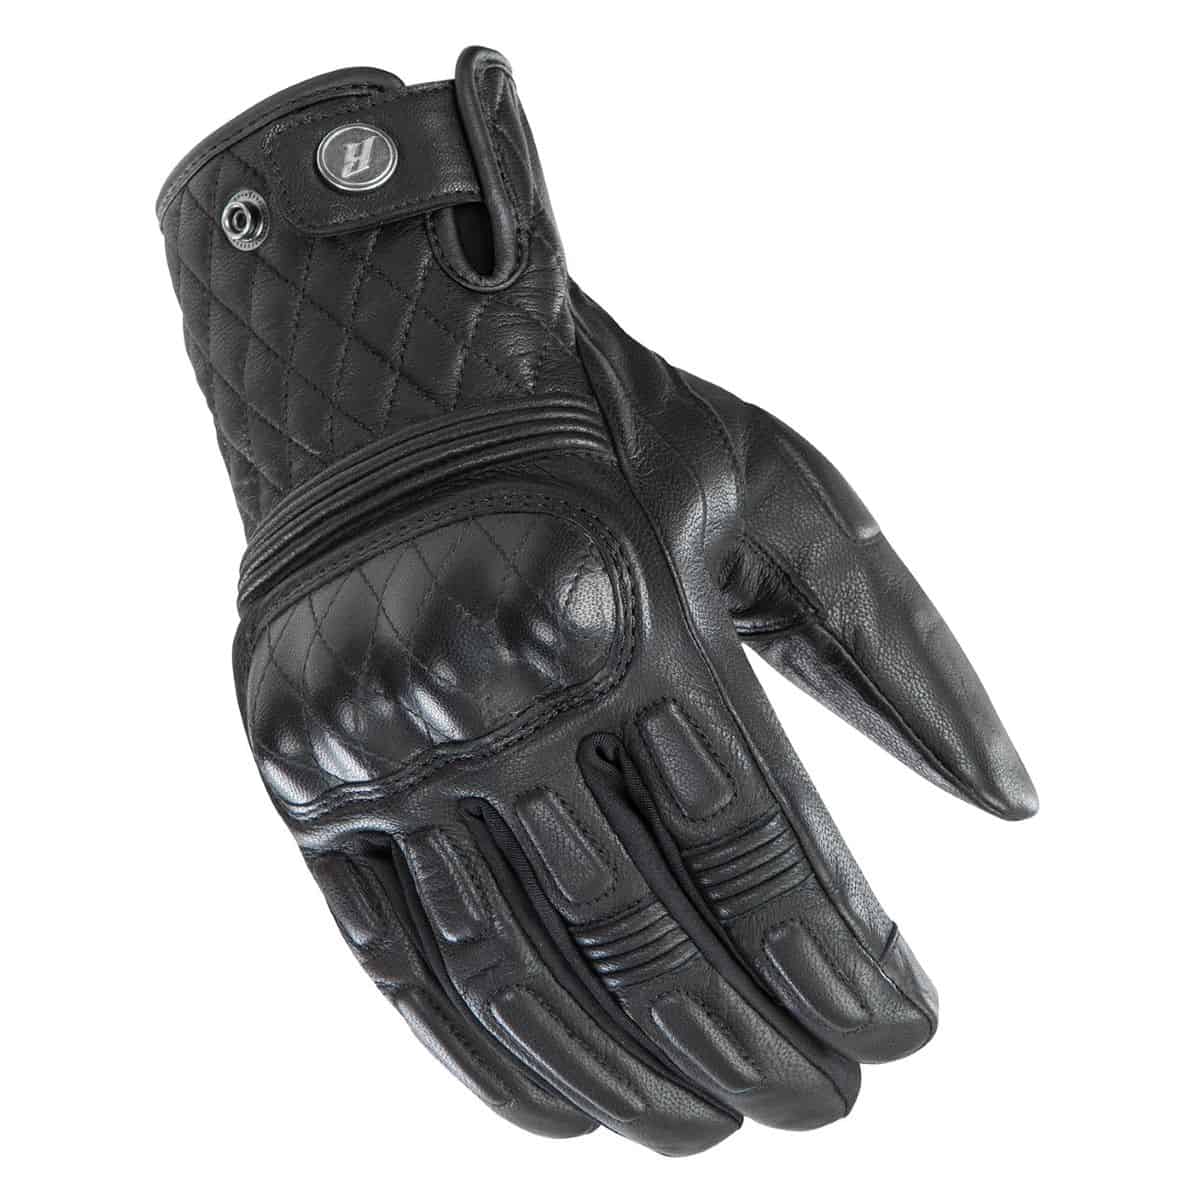 Joe Rocket Café Racer Motorcycle Gloves